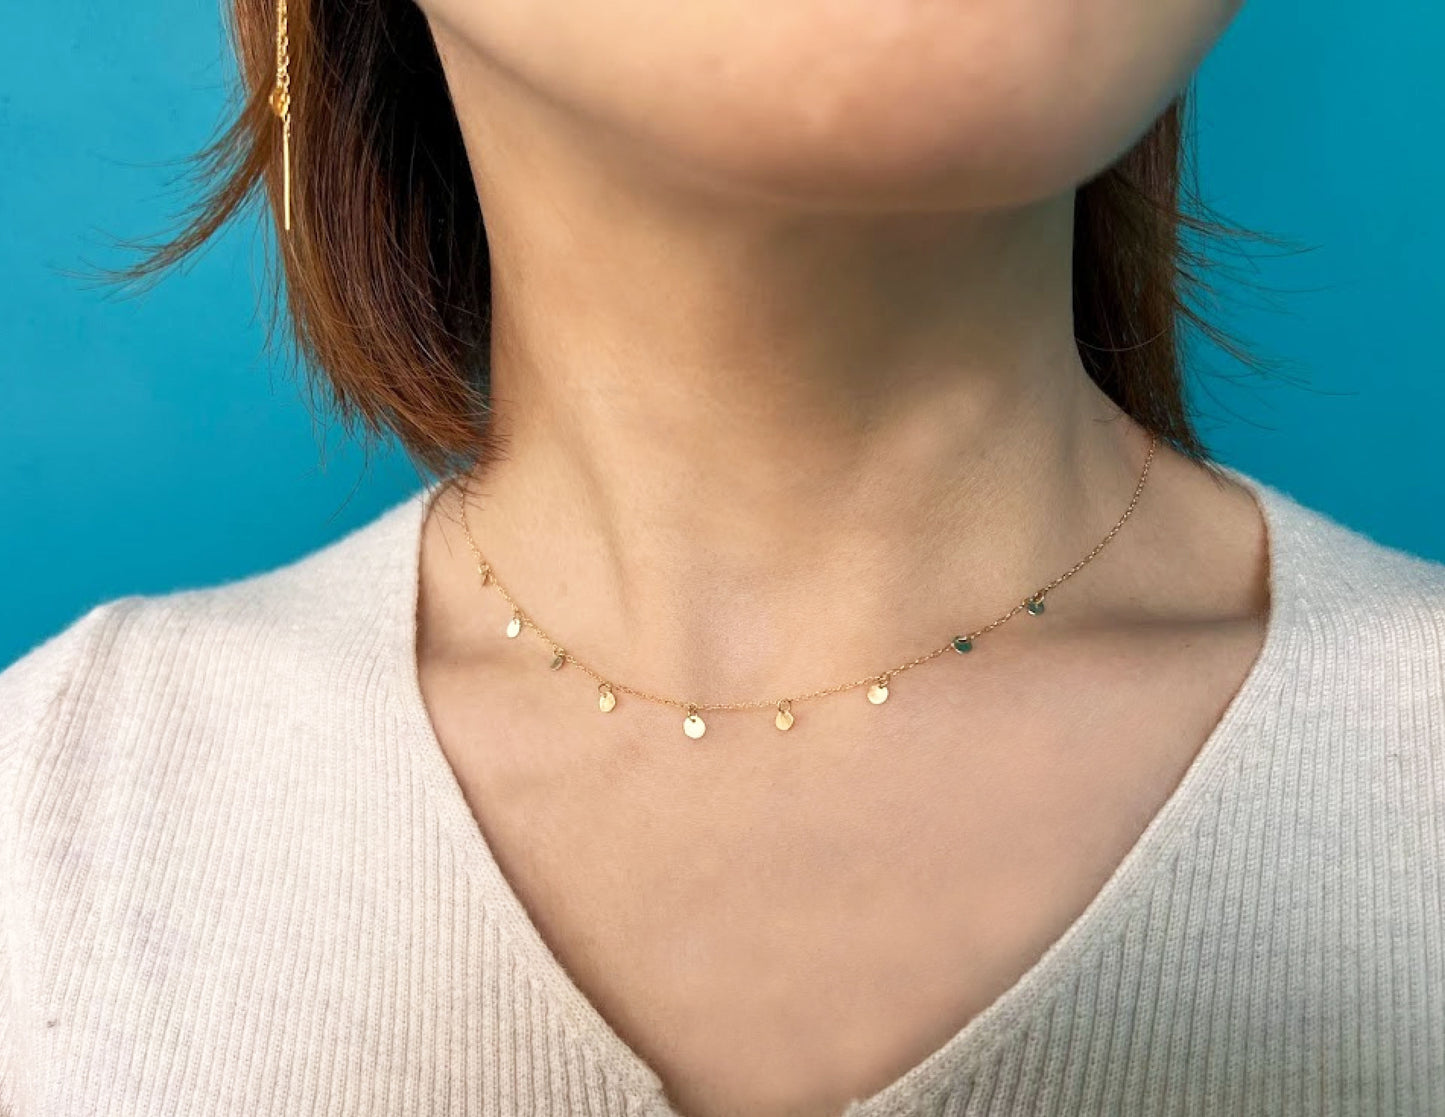 garland necklace 1 (K18/40cm)